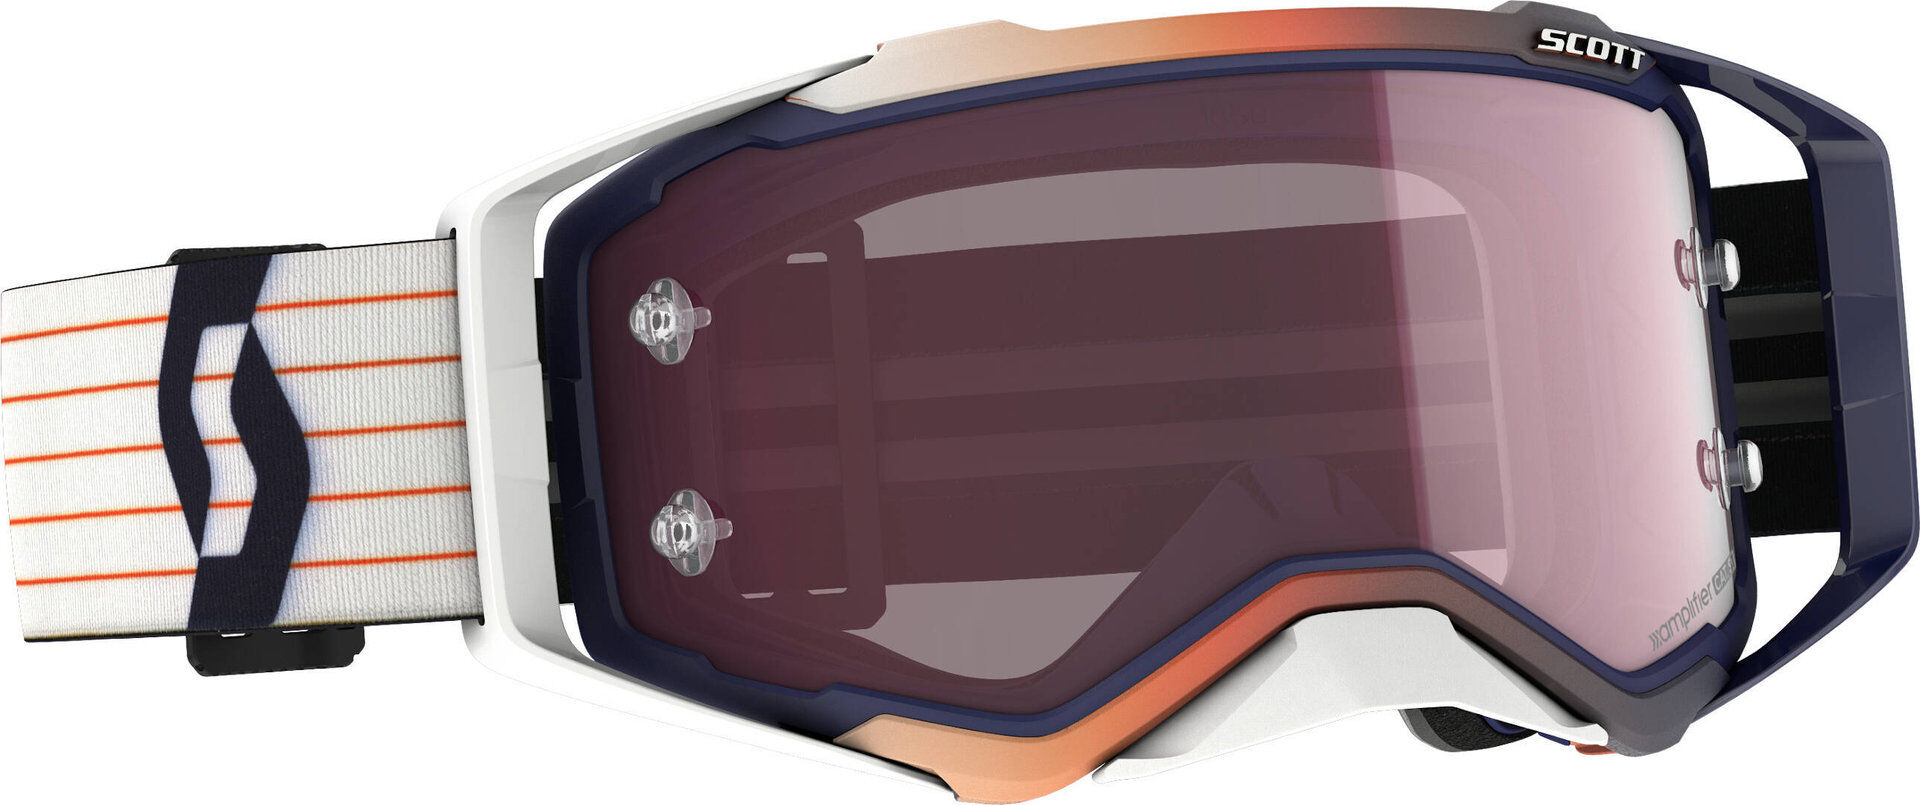 Scott Prospect Amplifier Gafas de Motocross naranja/blanco - Rosa (un tamaño)